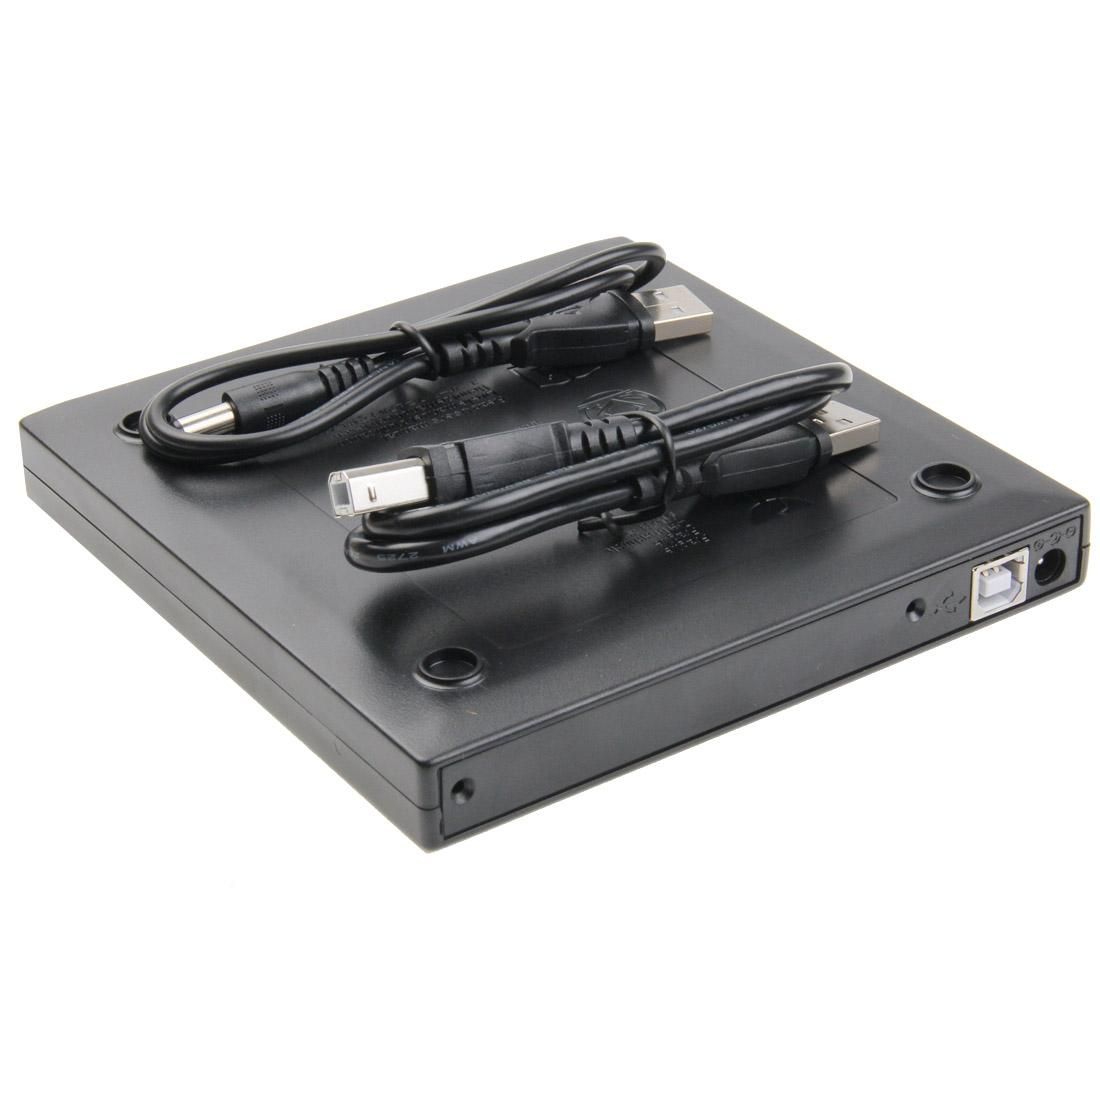 USB 2.0 Universal Notebook External 12.7mm CD/DVD SATA Port Optical Drive Box Kit (Black)